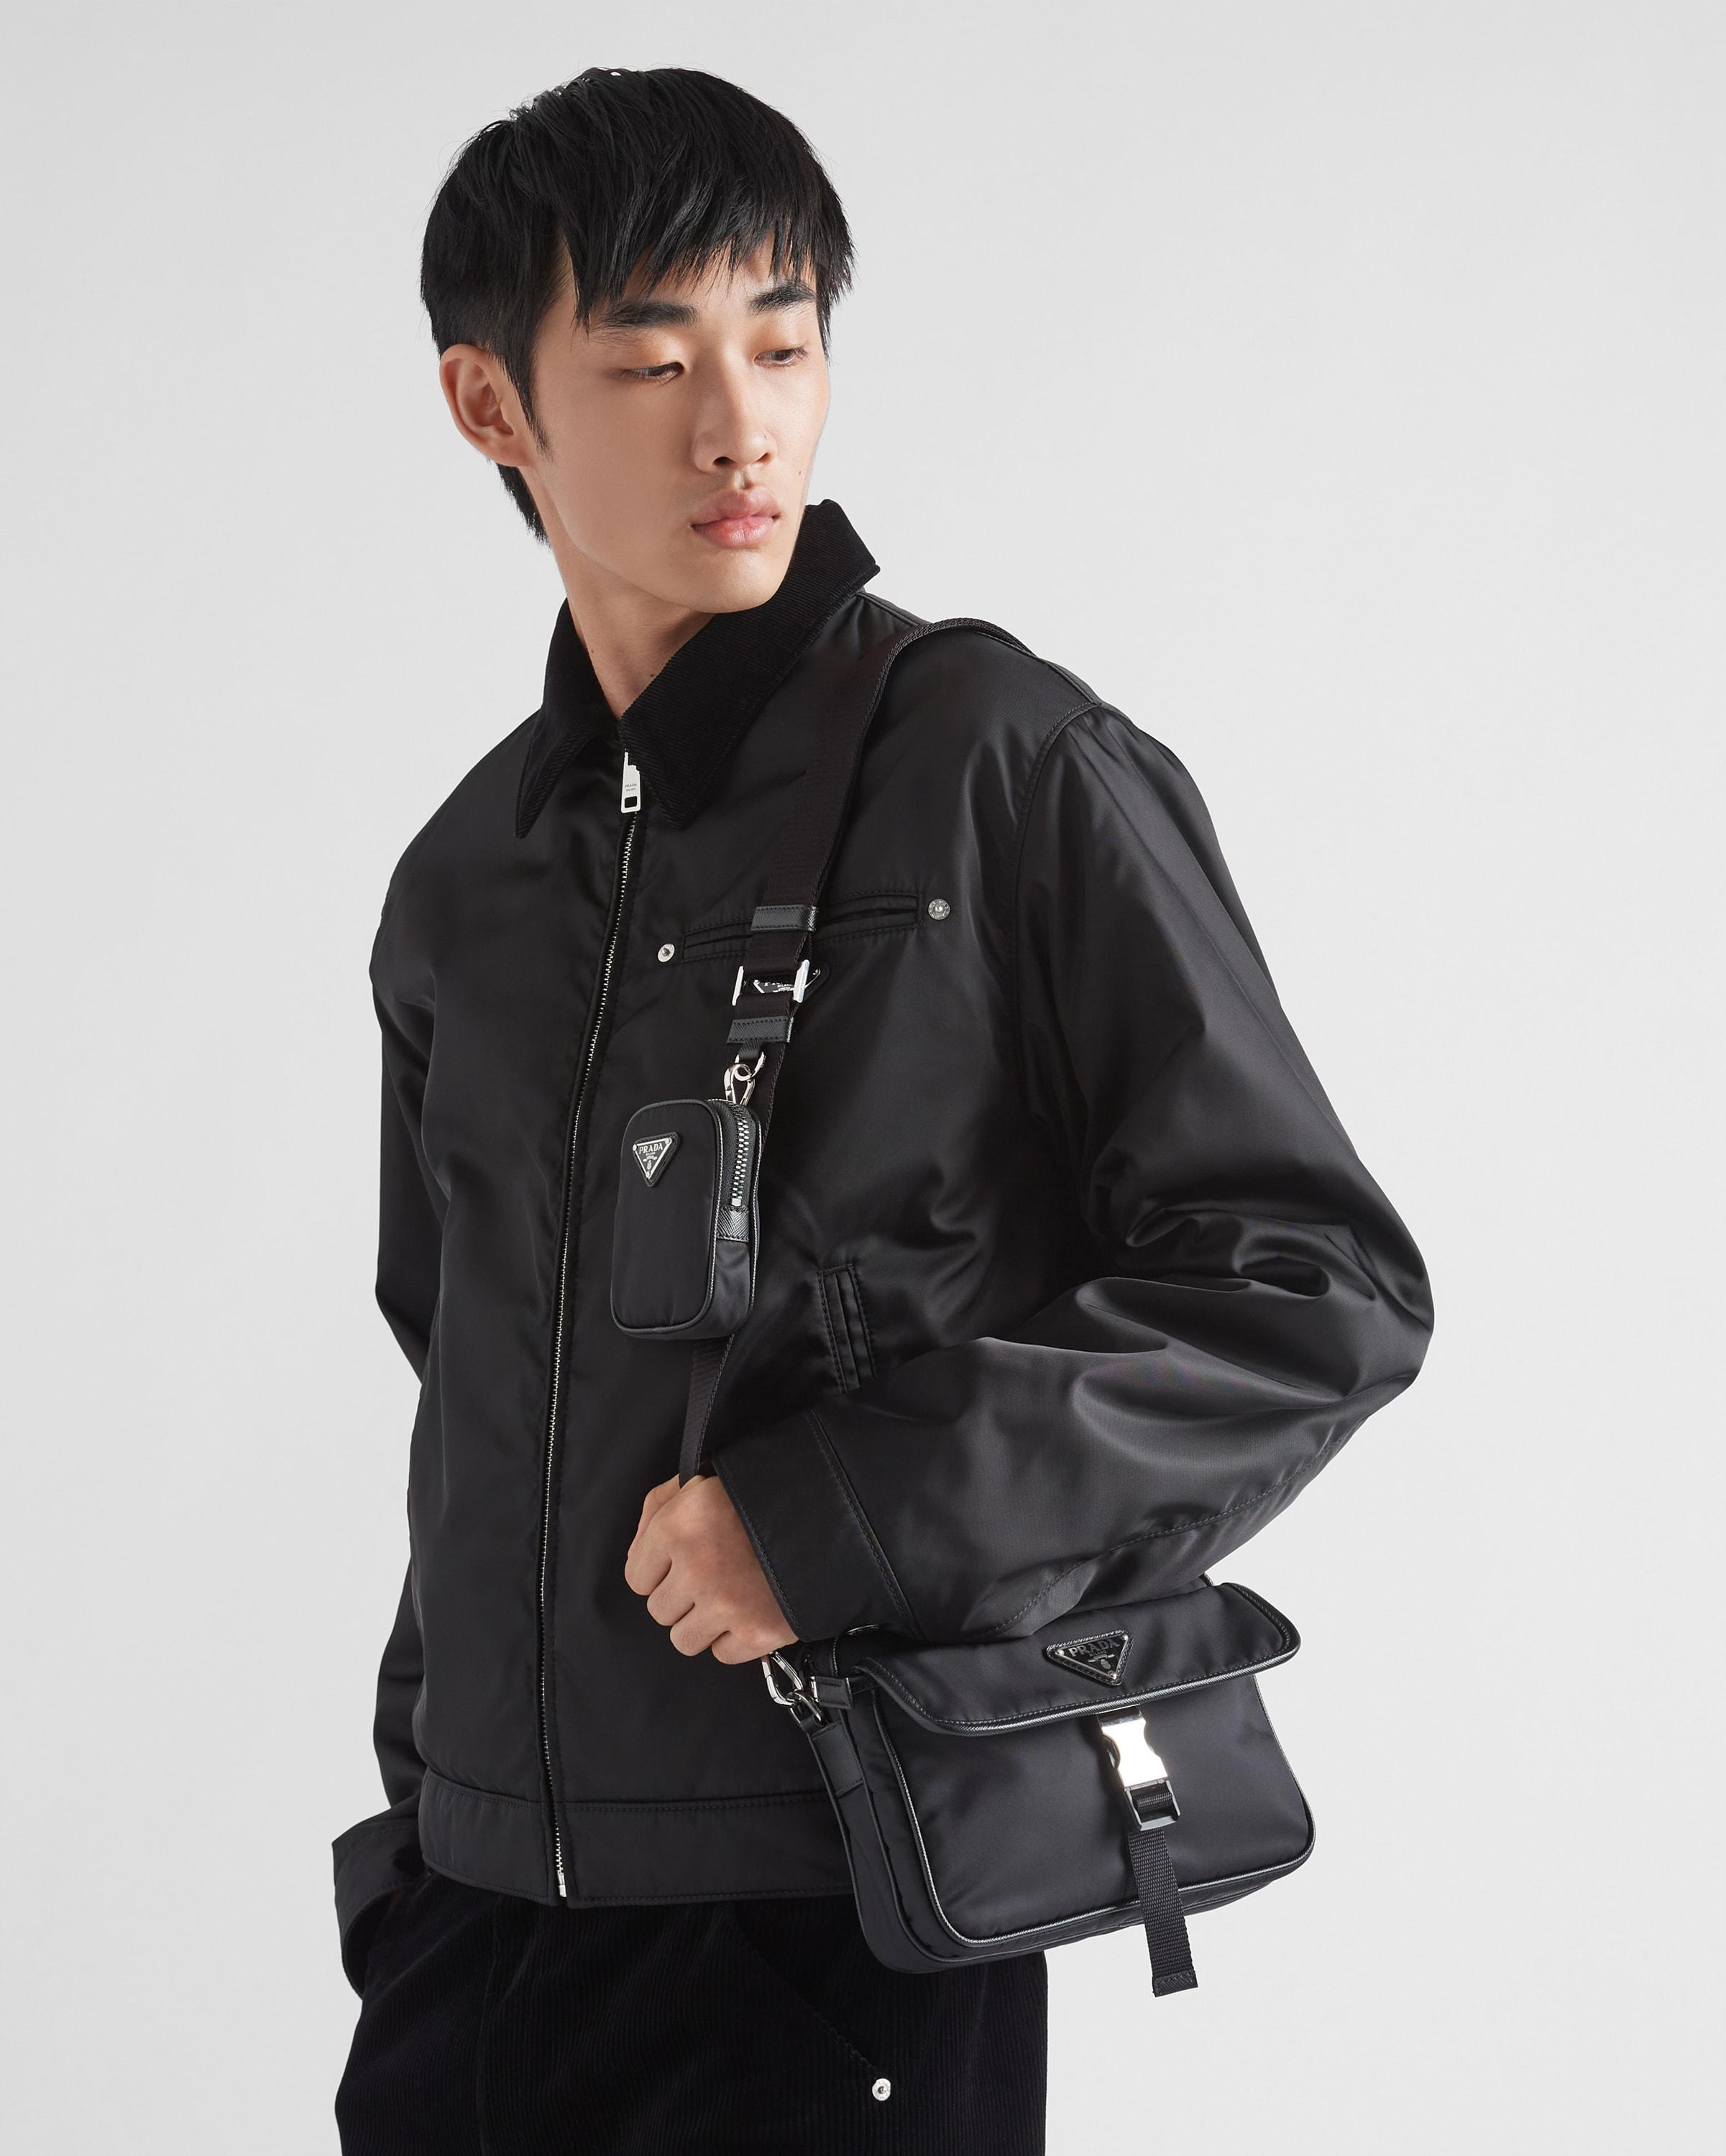 Prada Men's Saffiano Leather Shoulder Bag